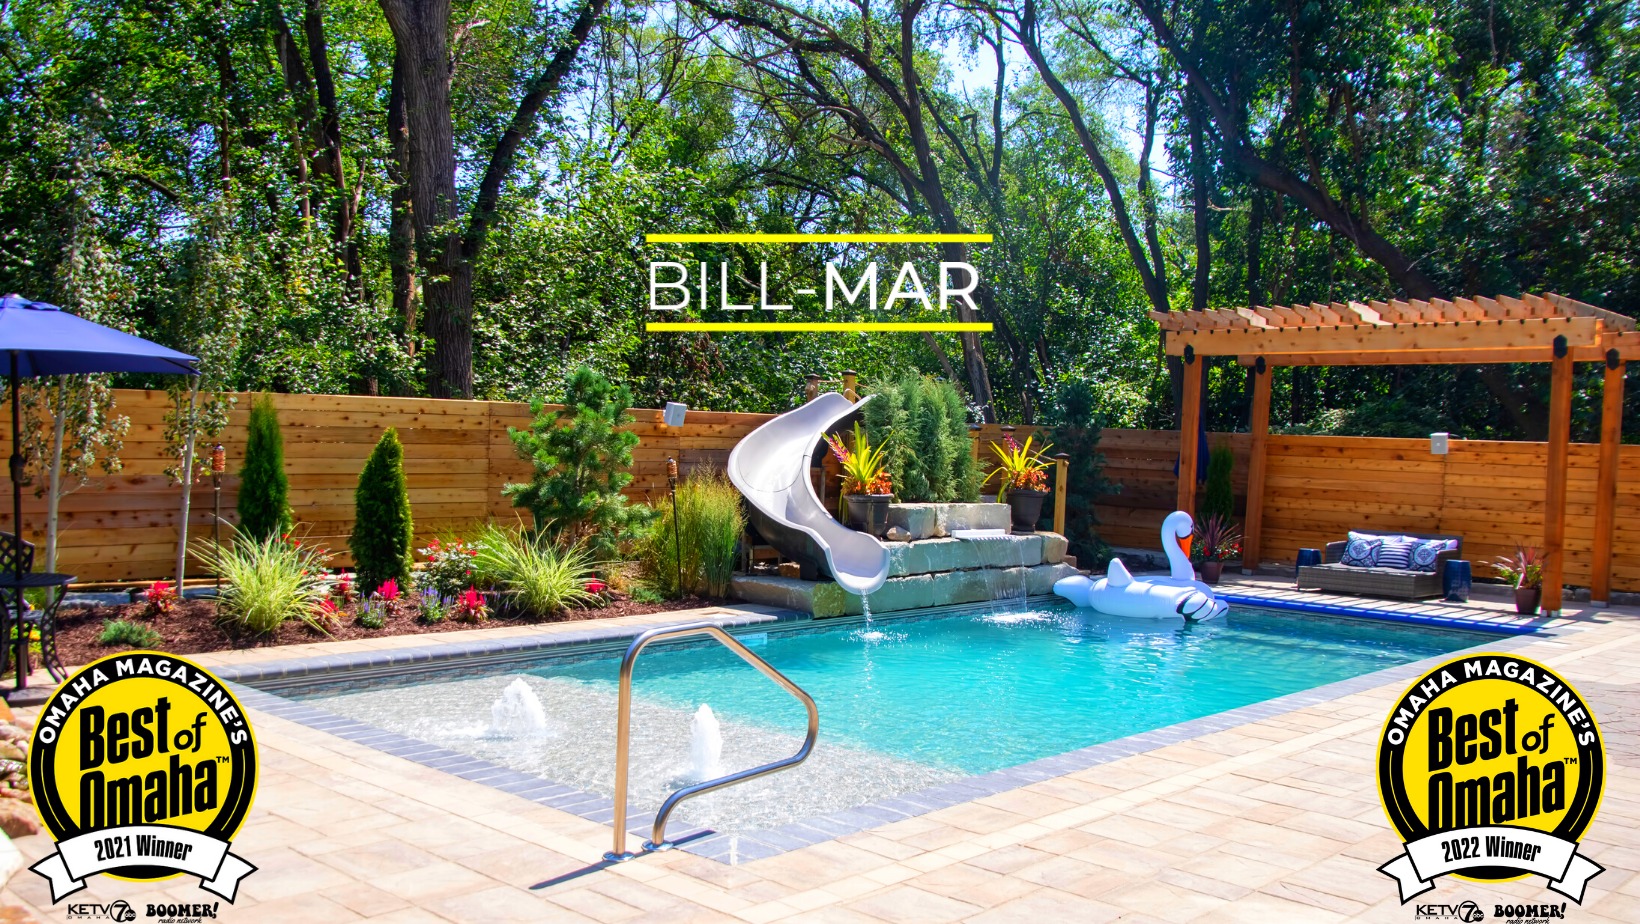 Bill-Mar Lawn & Landscaping